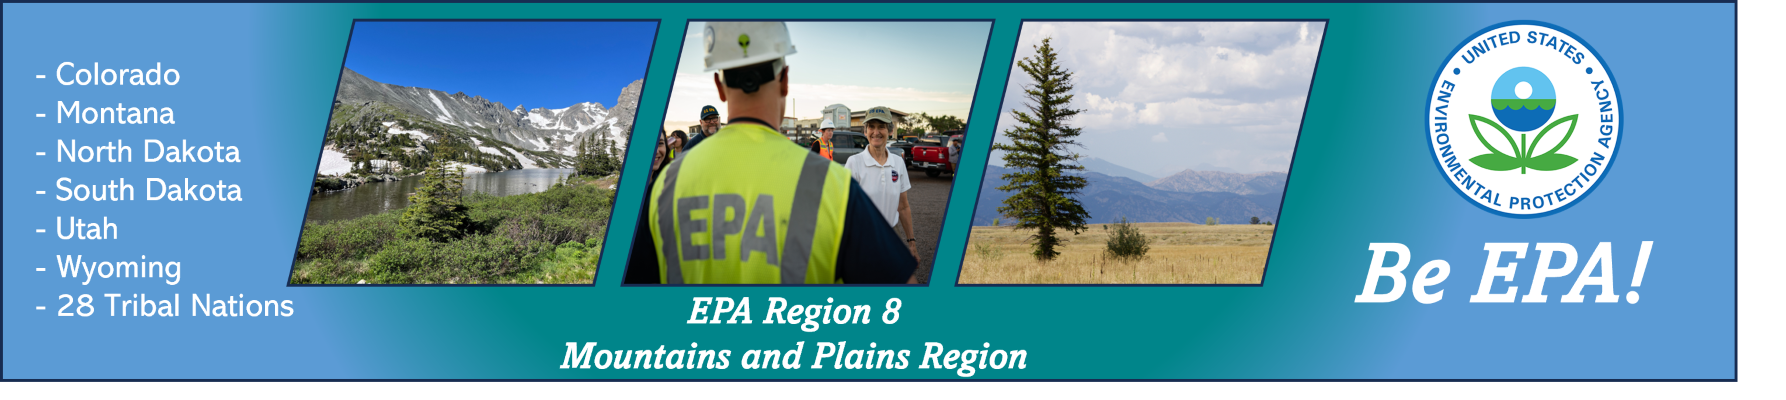 EPA Region 8 Banner